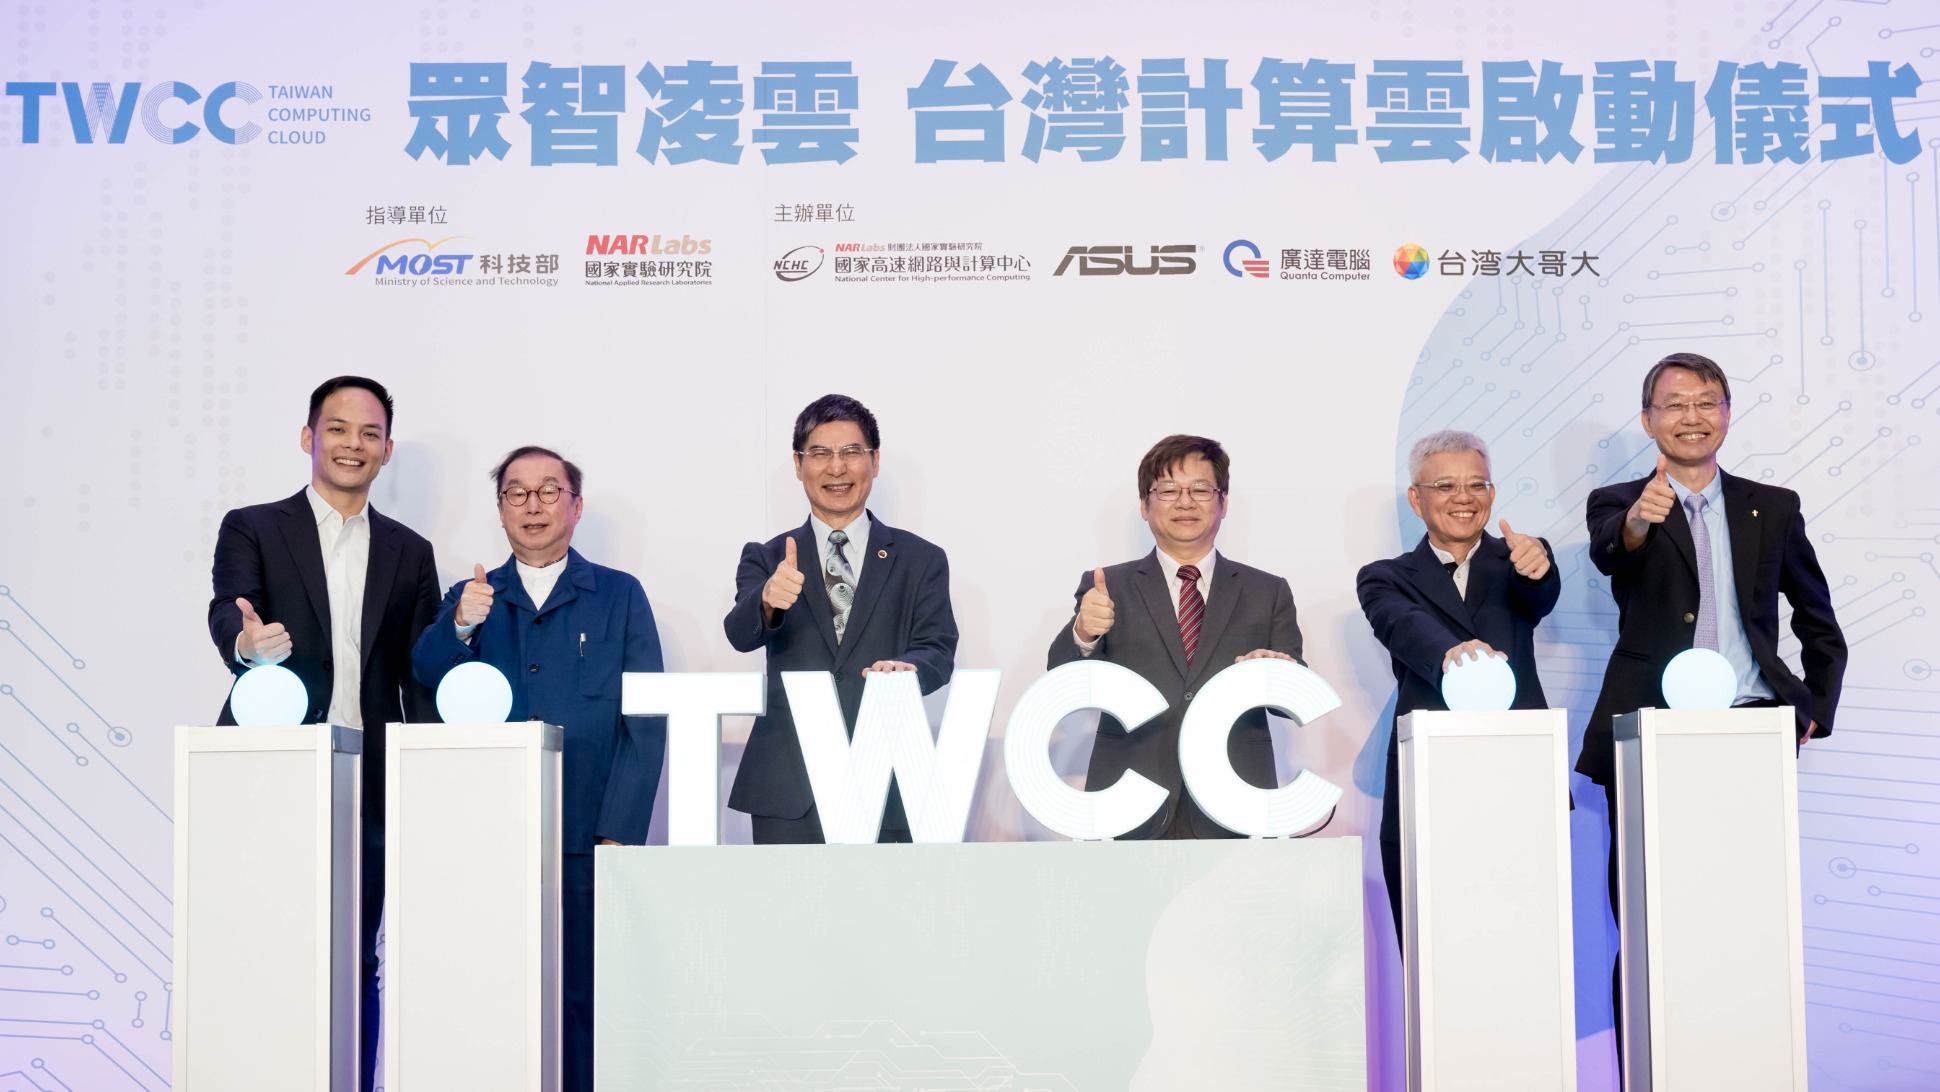 Taiwan Computing Cloud (TWCC) officially debuts, kicking start the future of AI cloud for Taiwan 